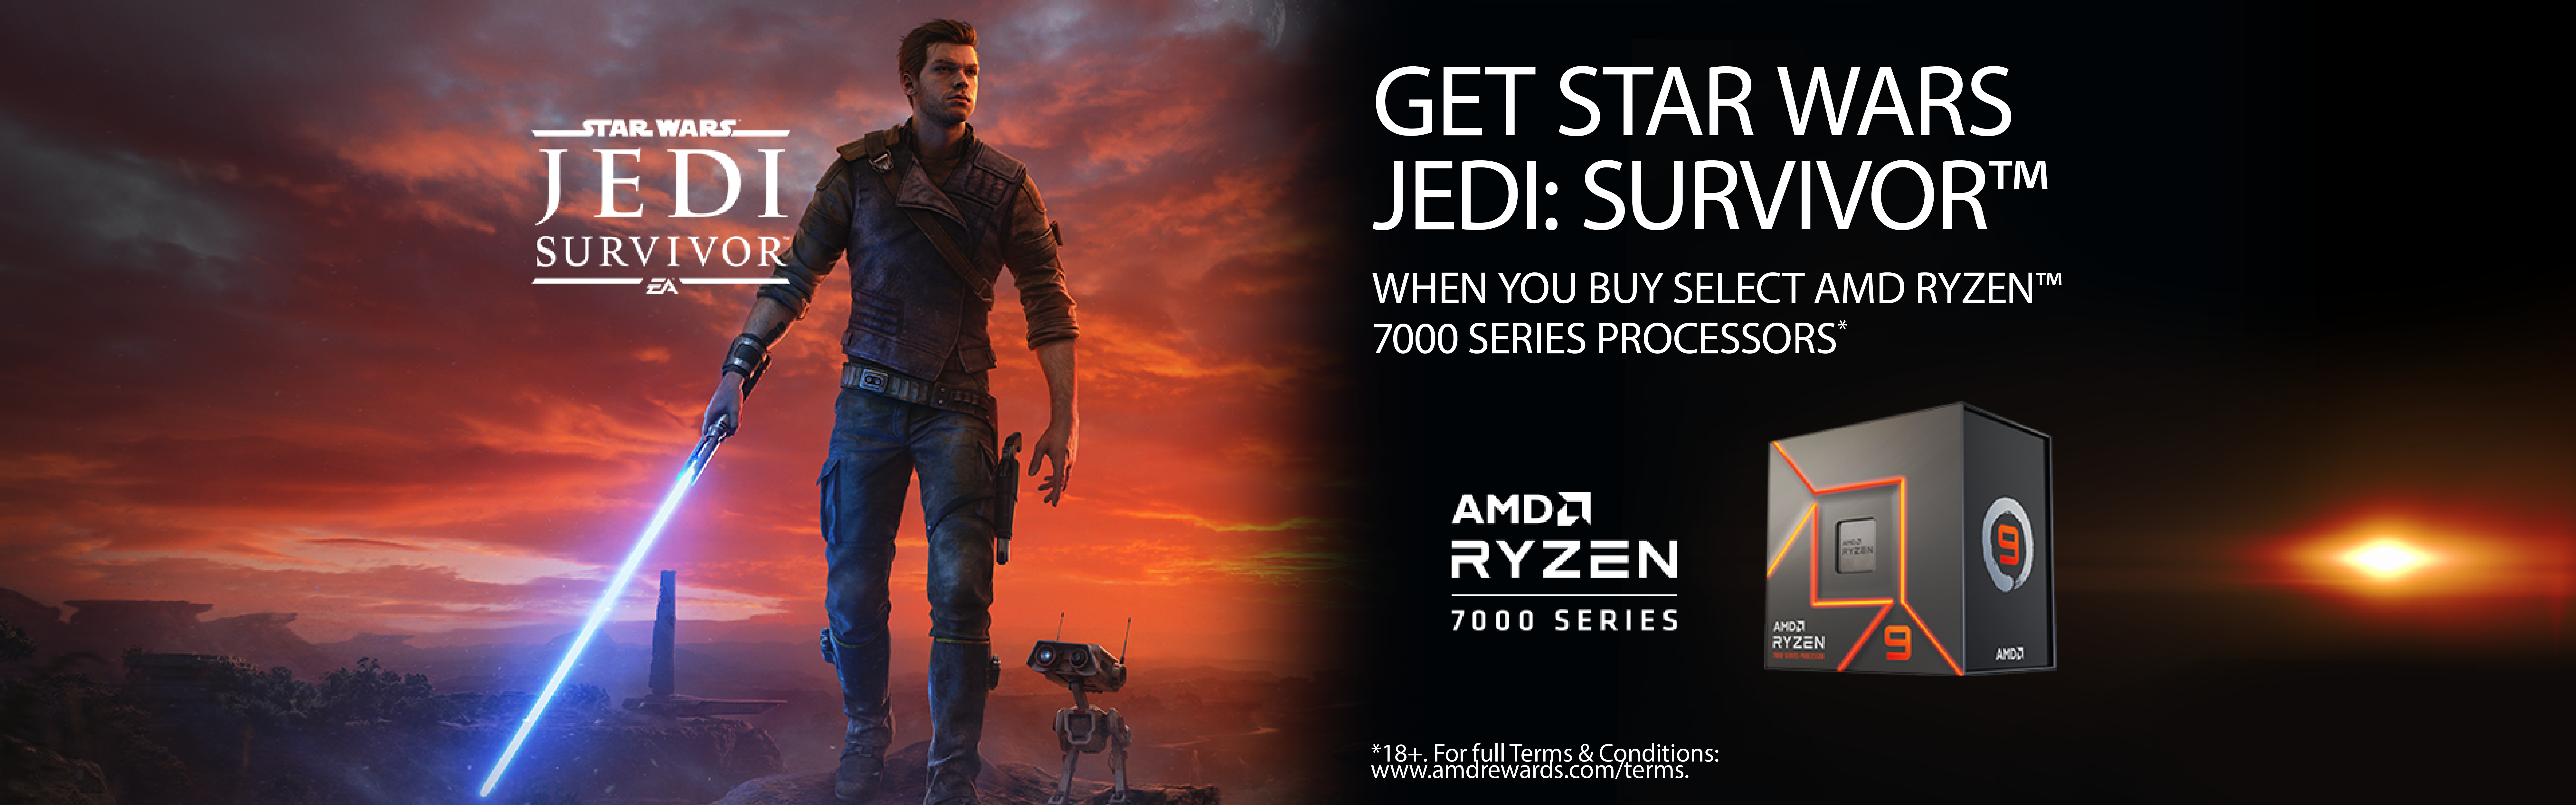 Get STAR WARS Jedi: Survivor™ when you buy select AMD Ryzen™ 7000 Series processors*